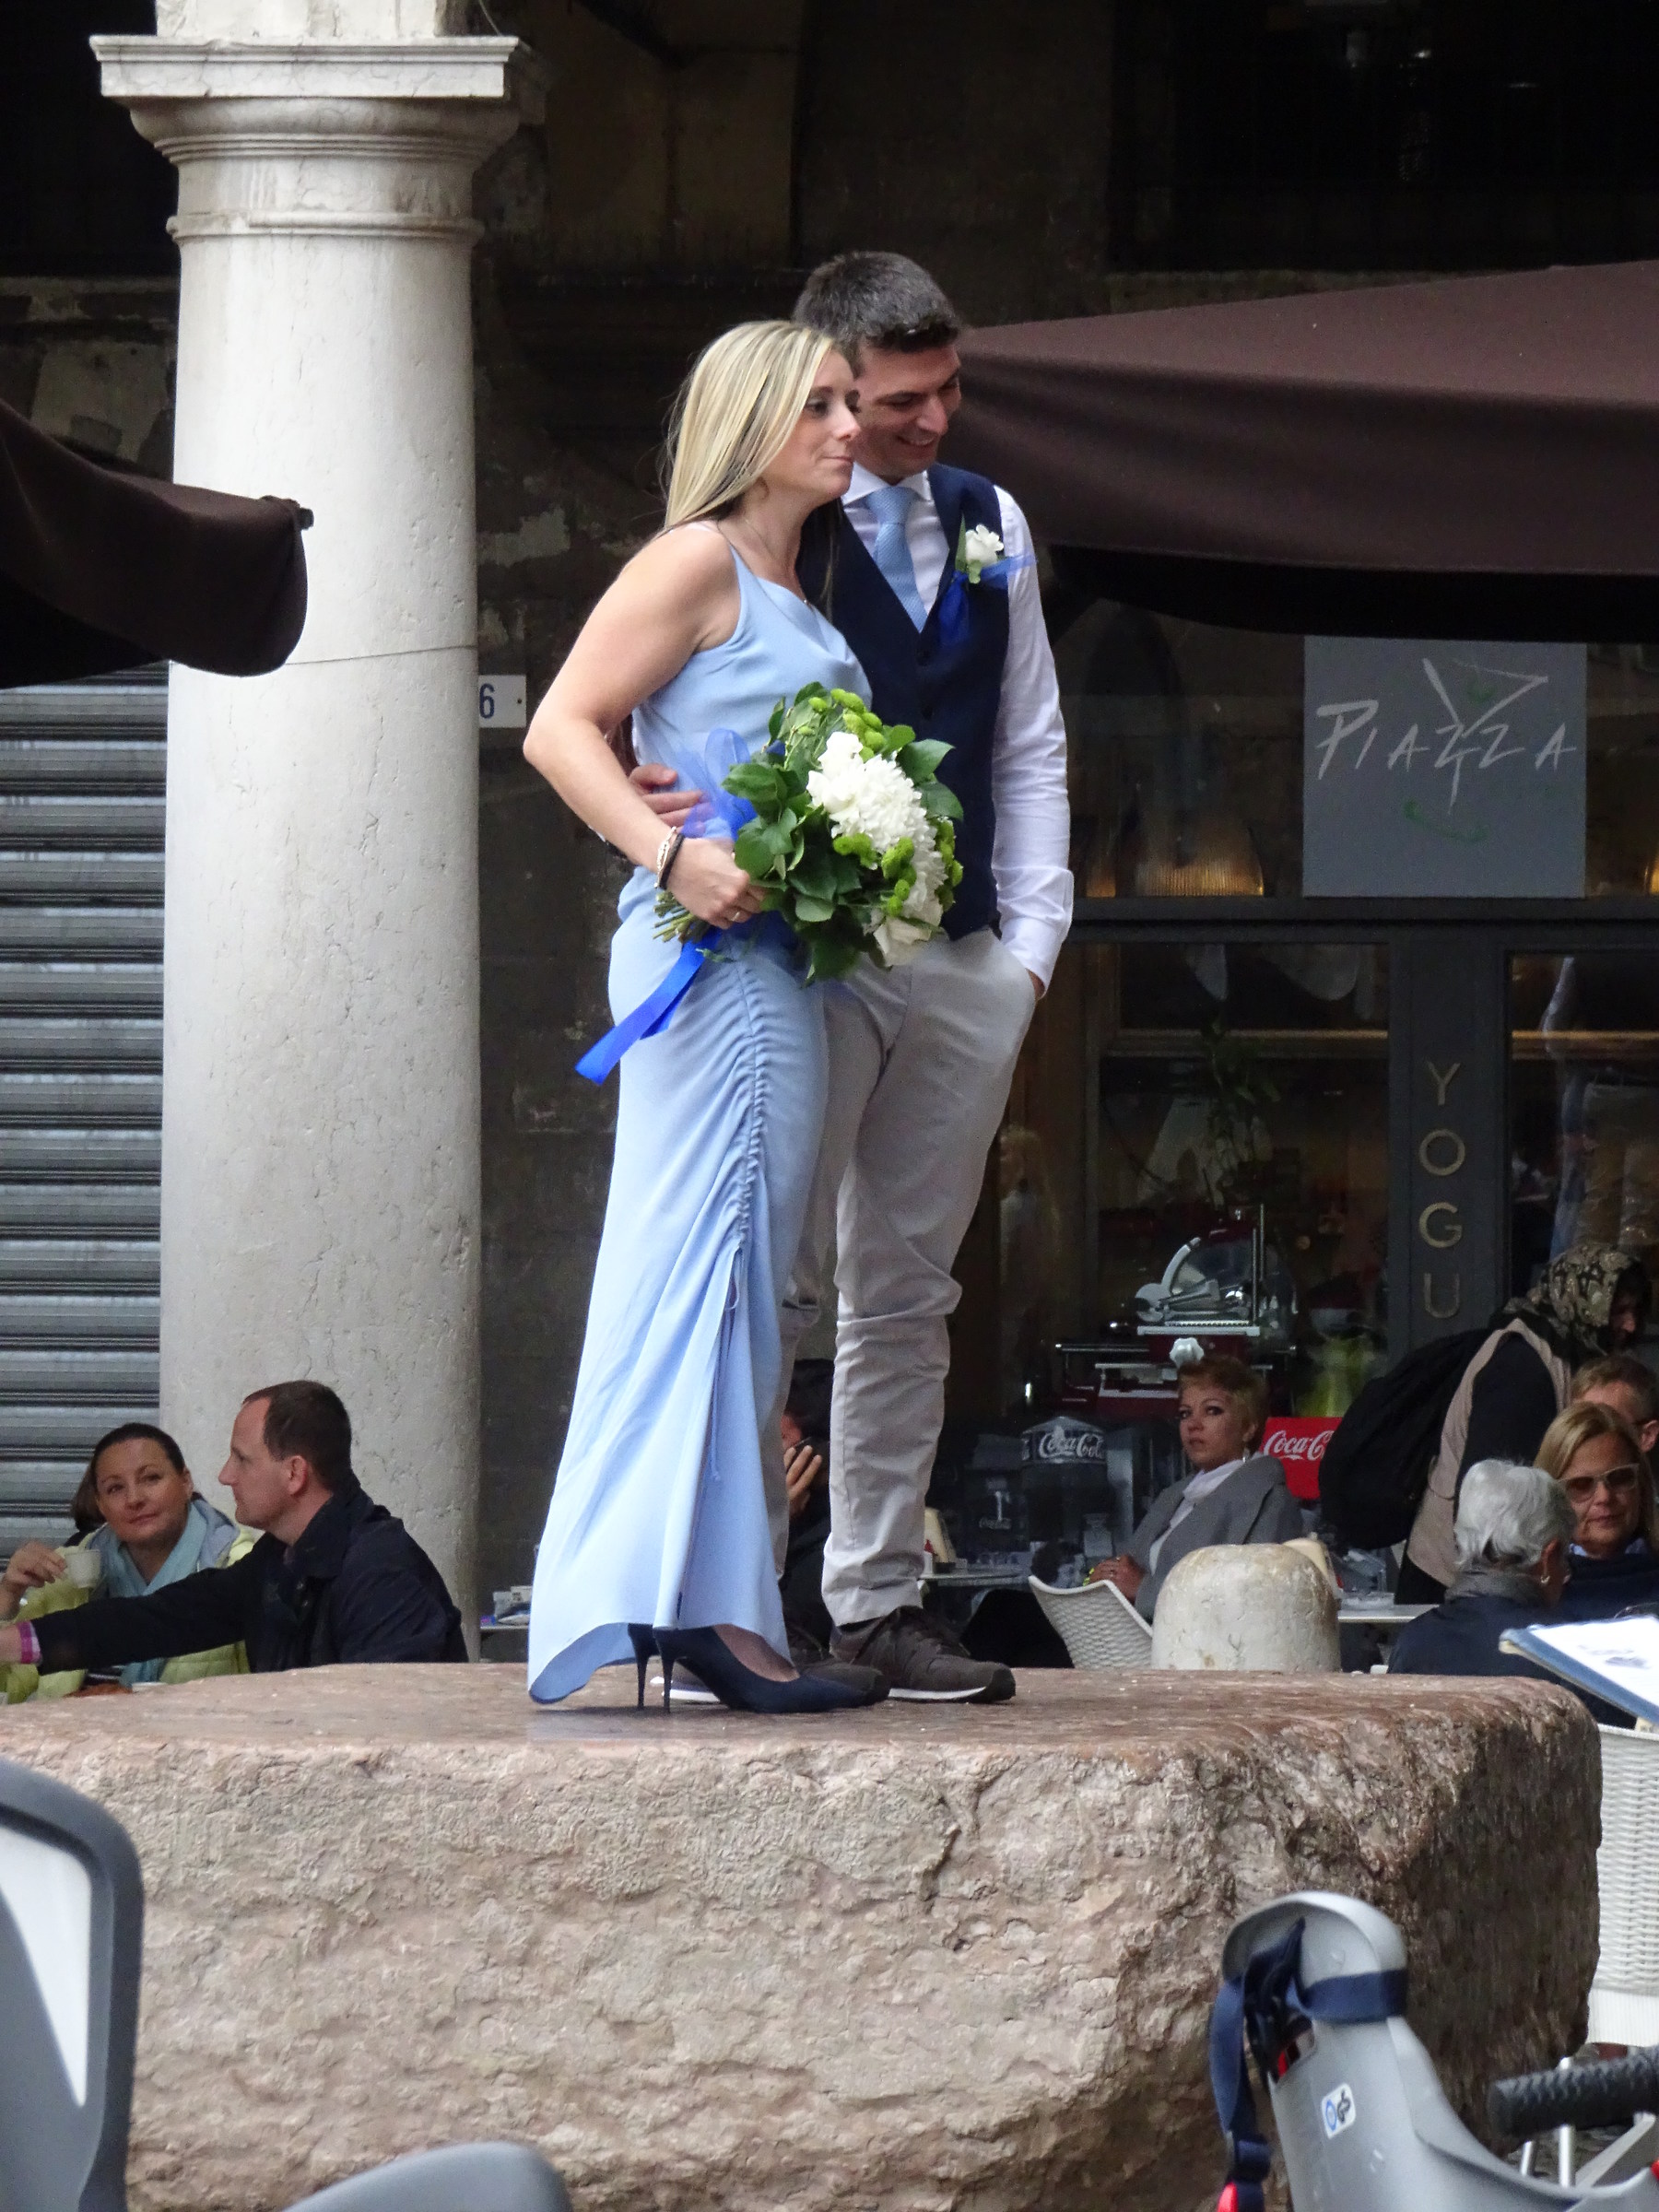 W the bride and groom on the Ringadora Pedra...